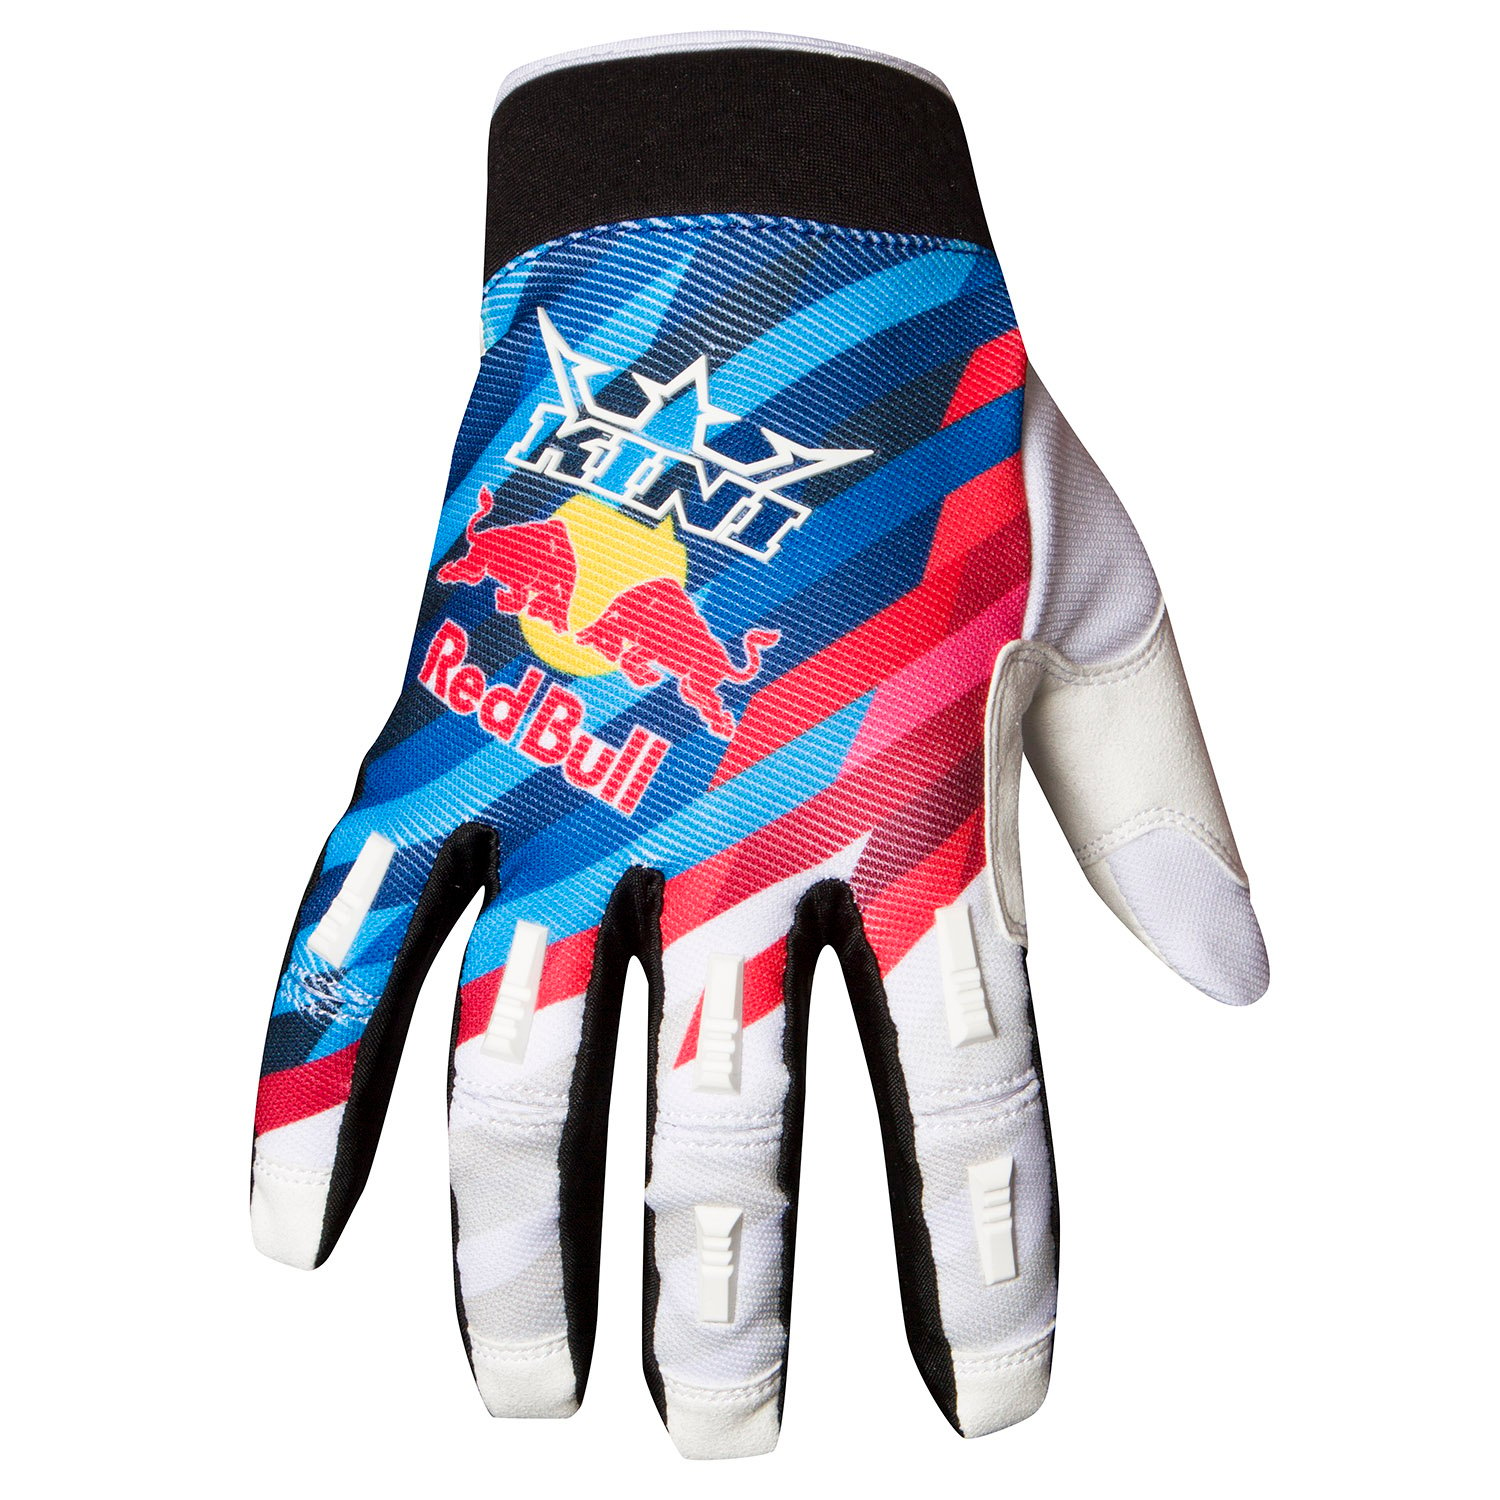 Kini Red Bull Handschuhe Competition Pro Rot/Blau